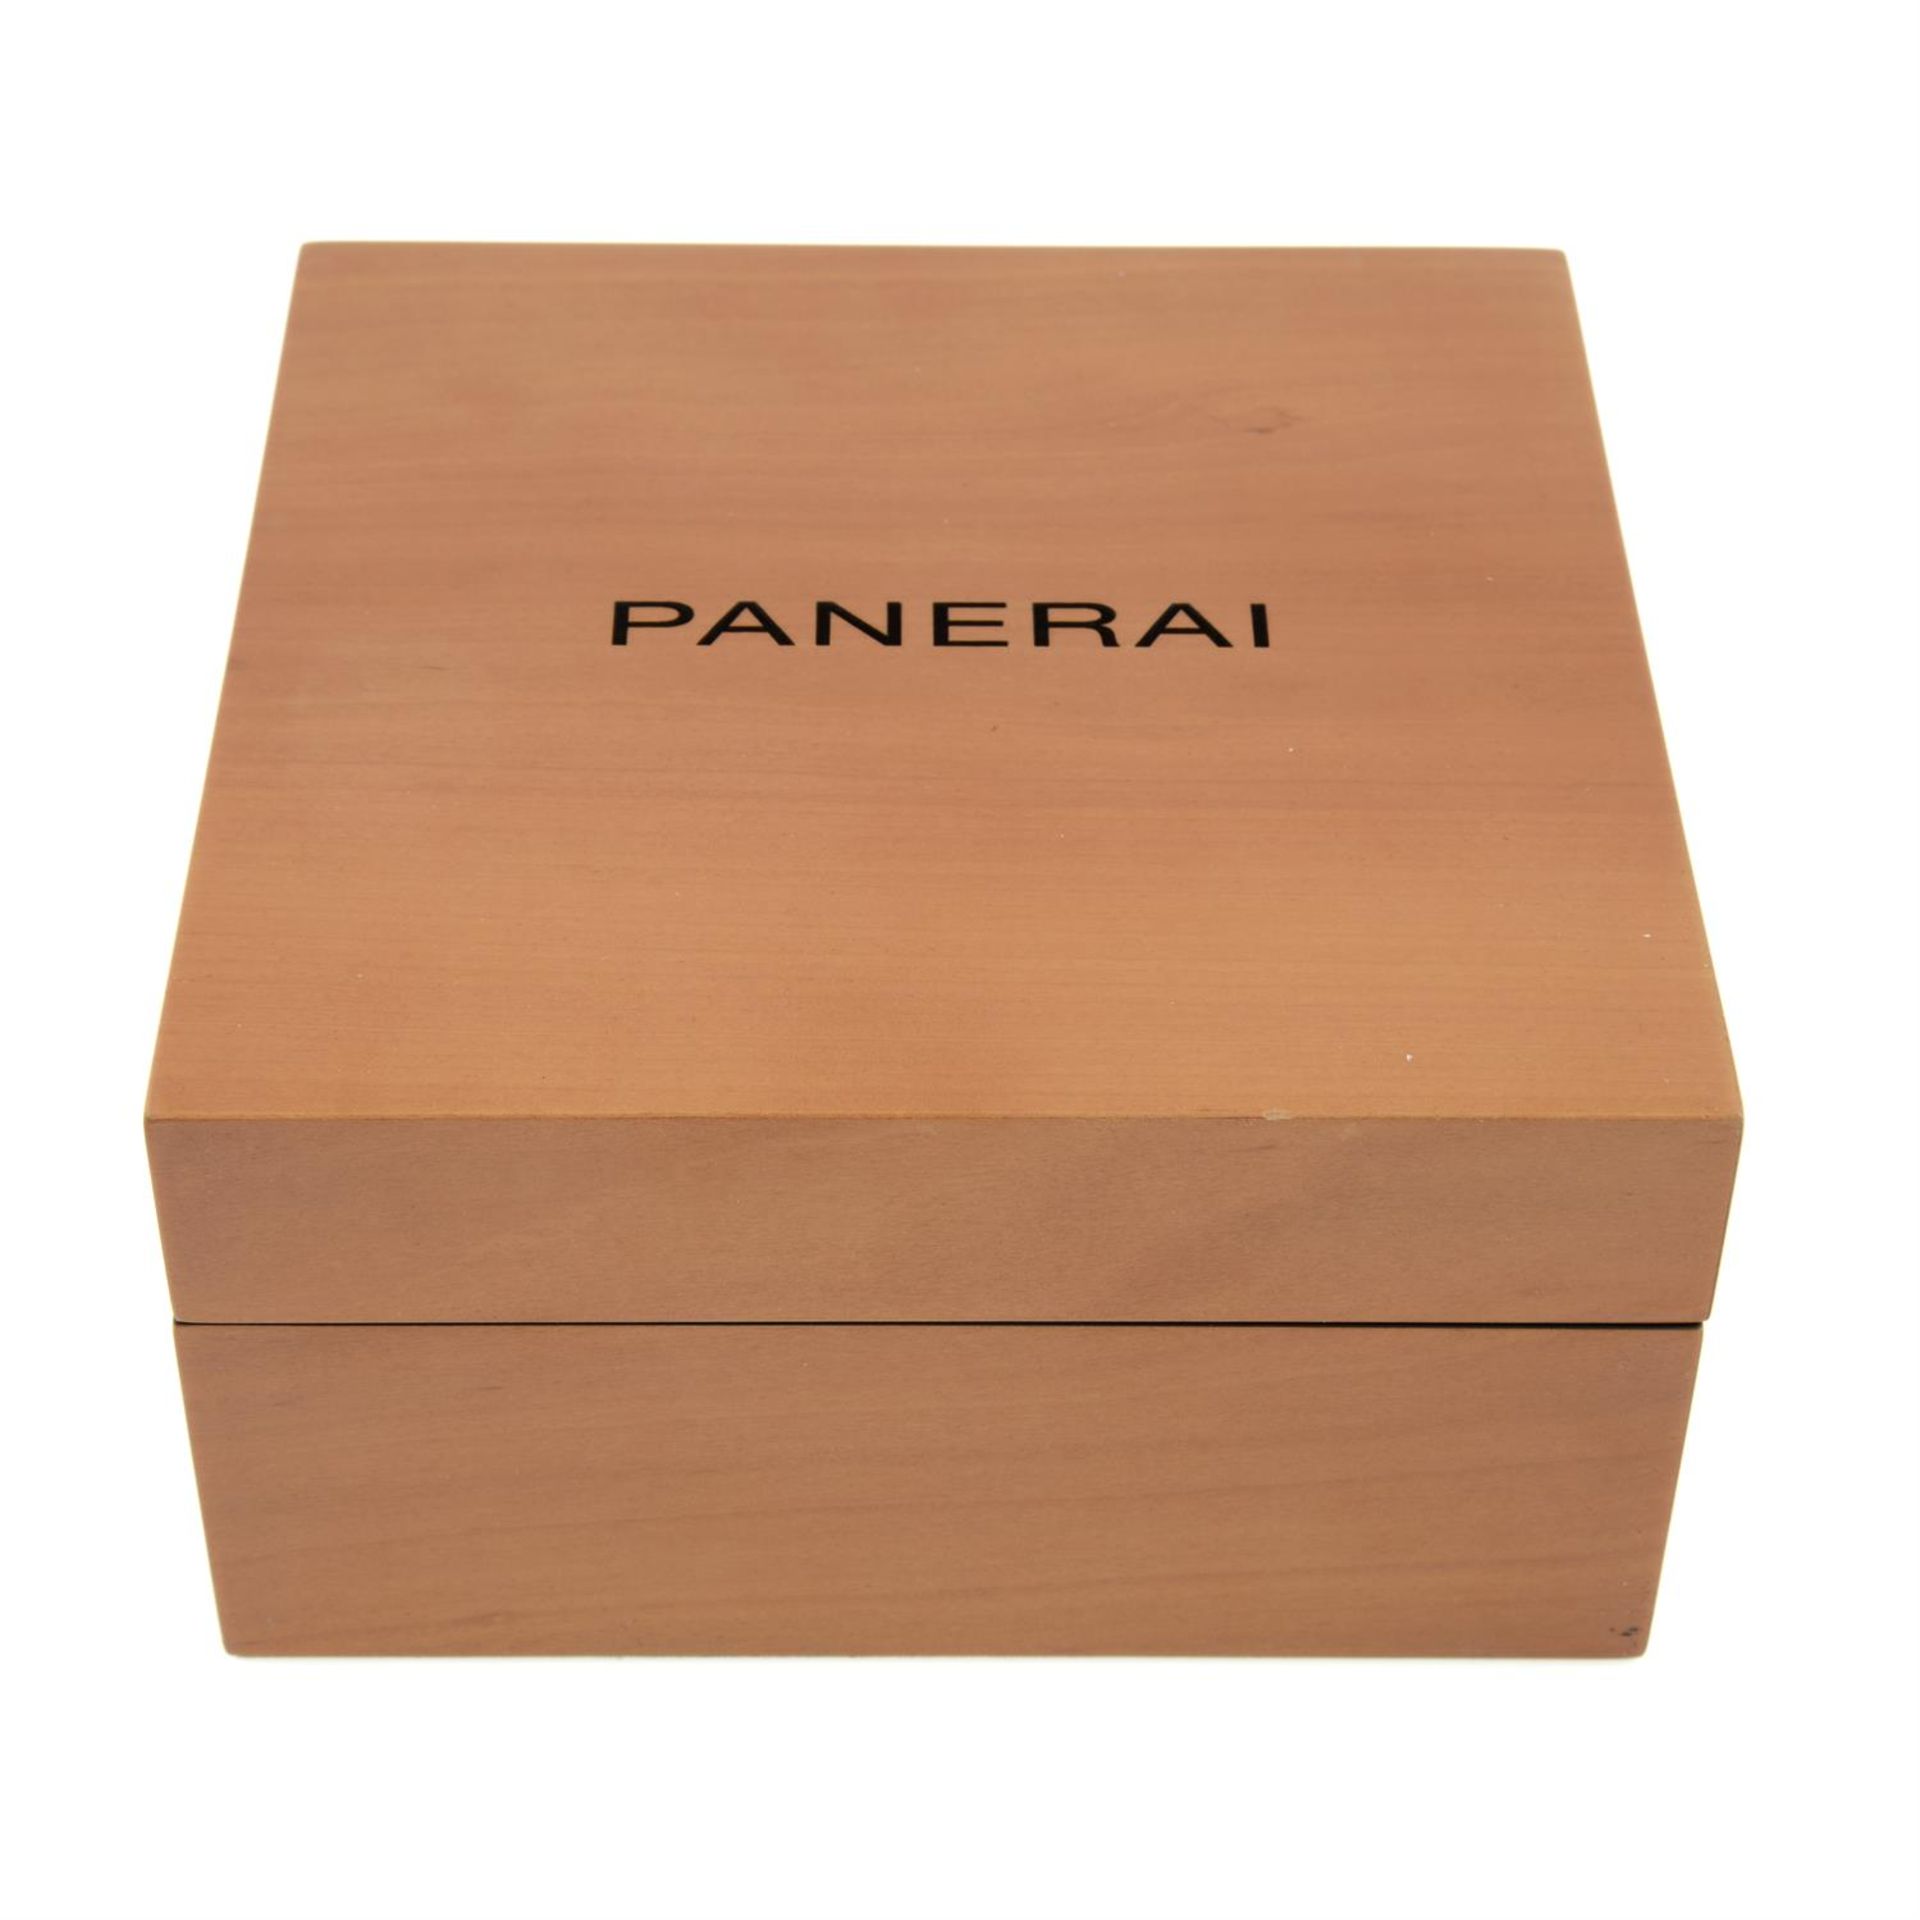 PANERAI - a group of ten watch boxes.